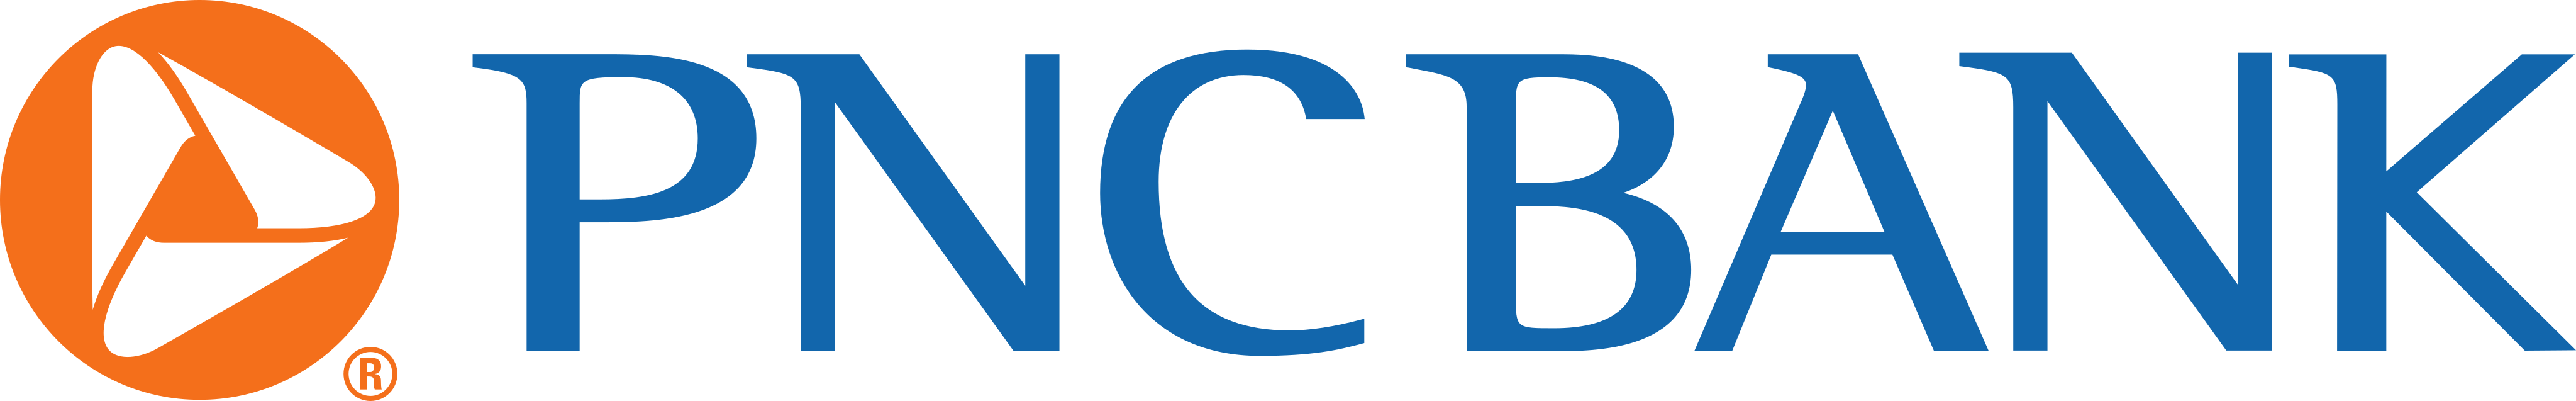 pnc-bank-logo-1.png